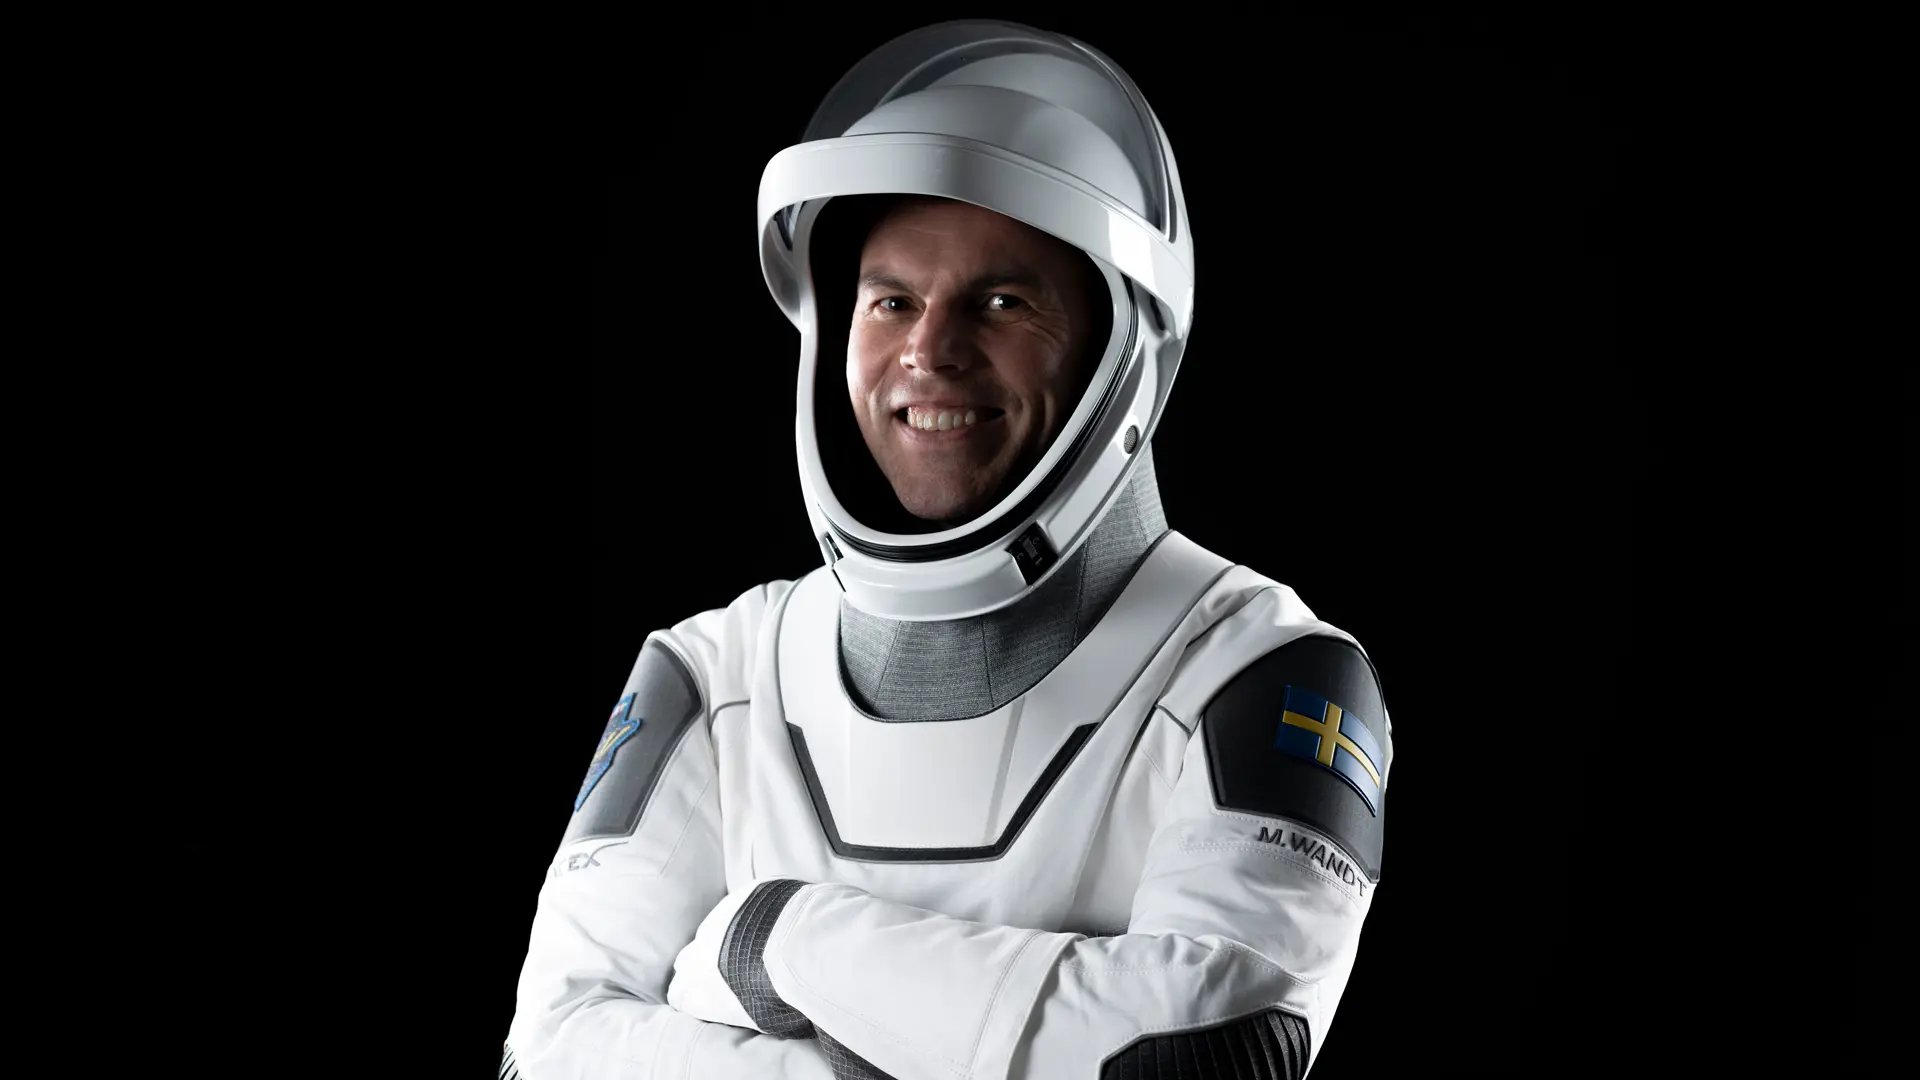 Marcus Wandt in spacesuit